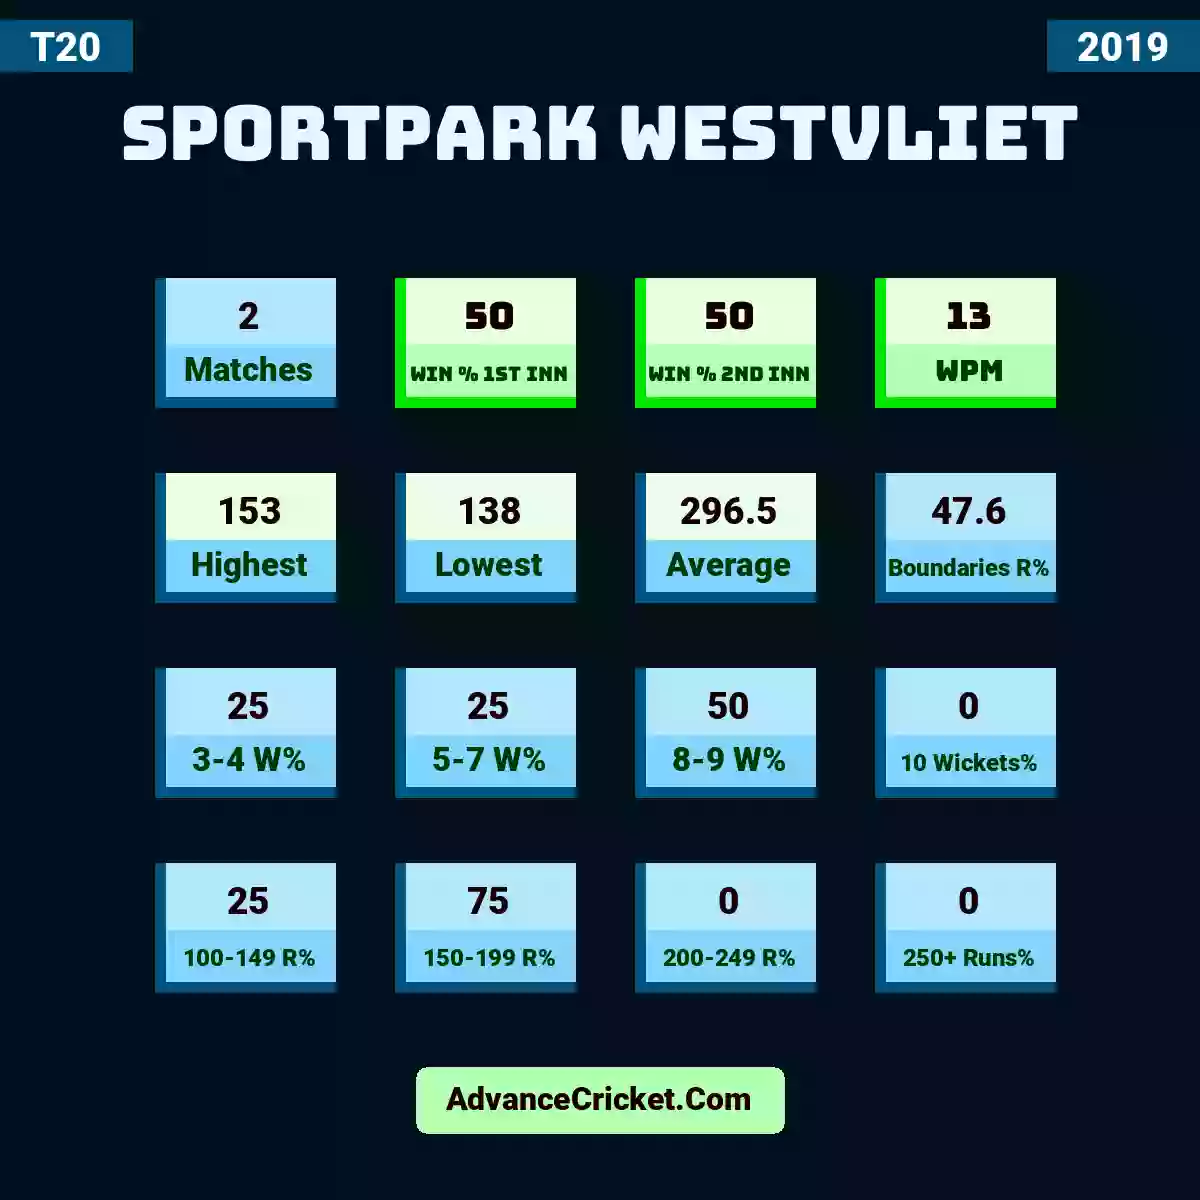 Image showing Sportpark Westvliet with Matches: 2, Win % 1st Inn: 50, Win % 2nd Inn: 50, WPM: 13, Highest: 153, Lowest: 138, Average: 296.5, Boundaries R%: 47.6, 3-4 W%: 25, 5-7 W%: 25, 8-9 W%: 50, 10 Wickets%: 0, 100-149 R%: 25, 150-199 R%: 75, 200-249 R%: 0, 250+ Runs%: 0.